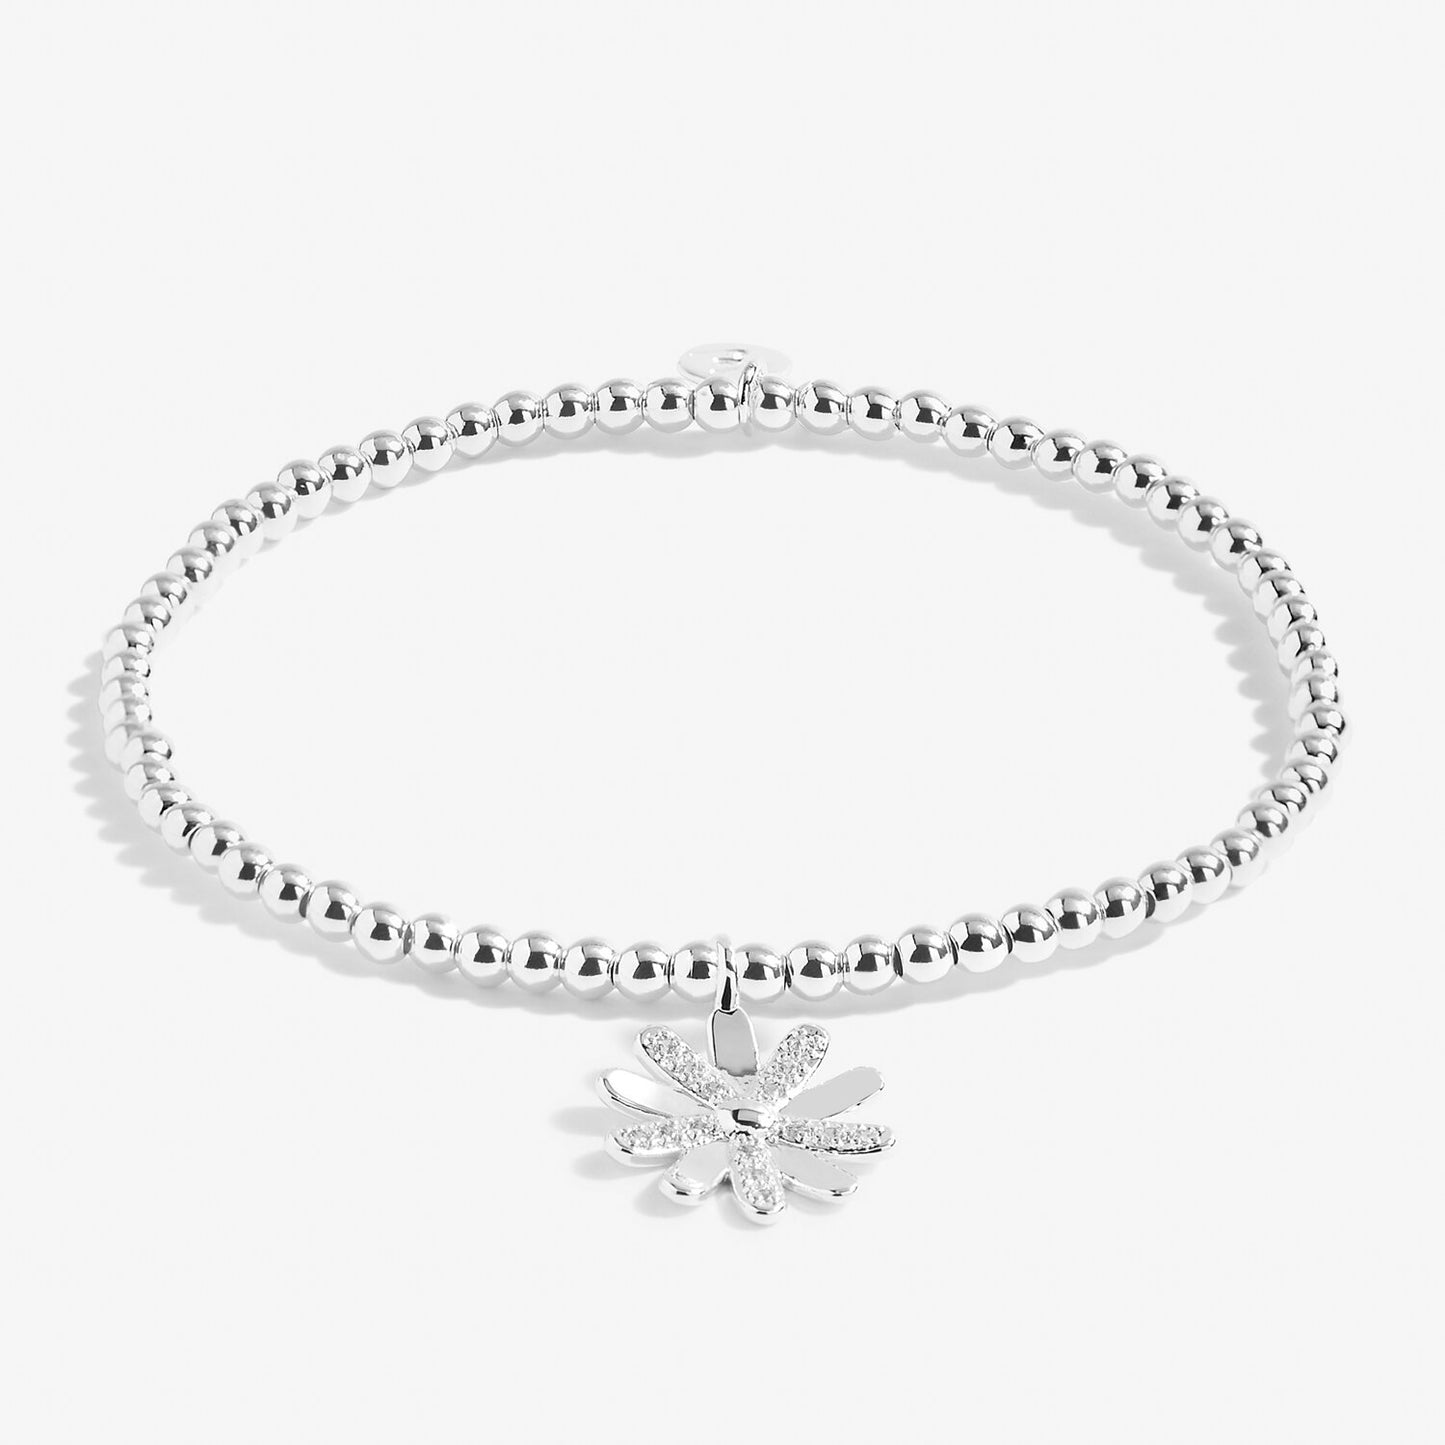 Joma Jewellery - A Little Great Grandma Bracelet